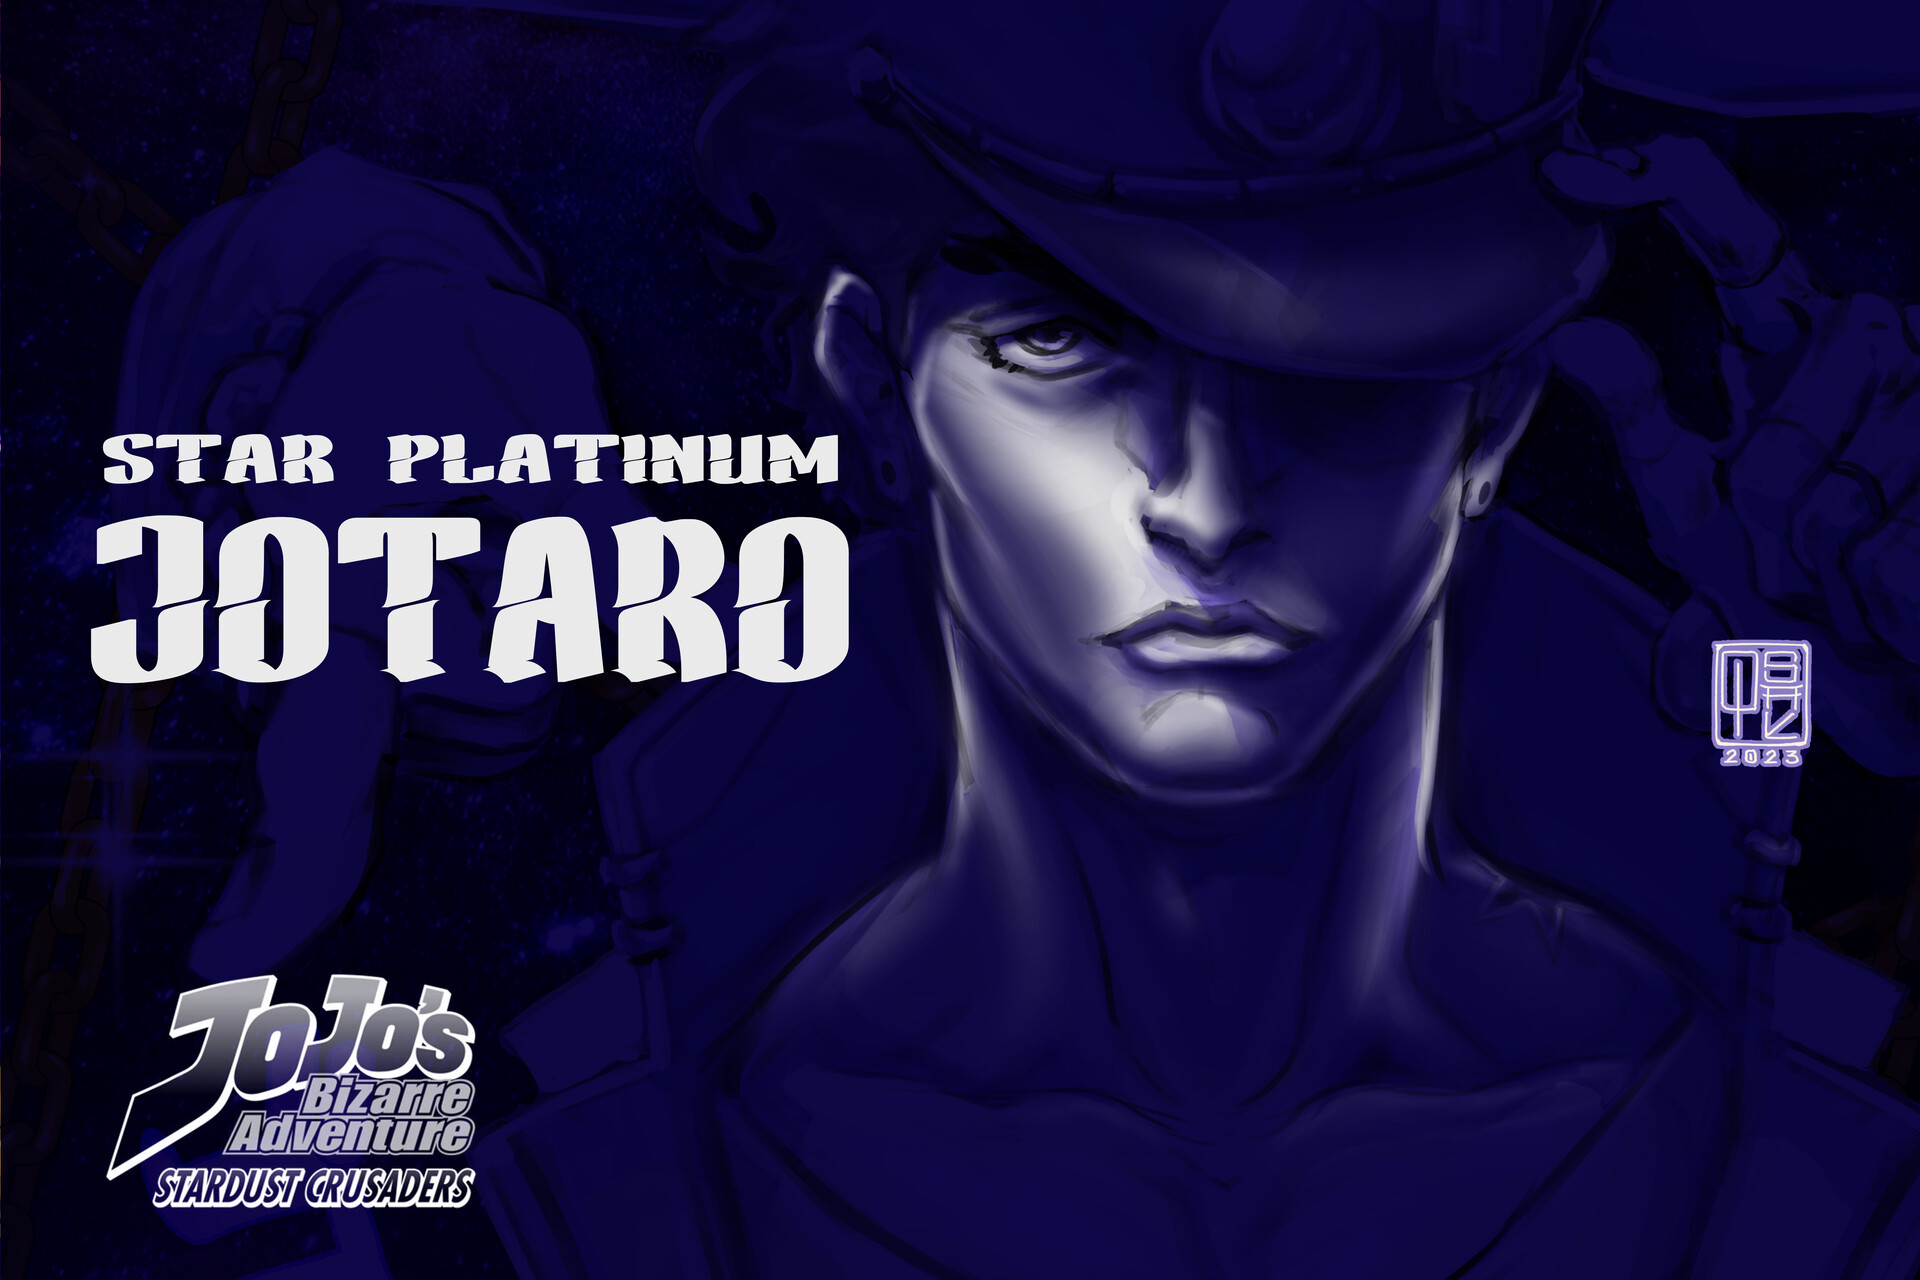 ArtStation - Kujo Jotaro & Star Platinum (Jojo's Bizarre Adventure)